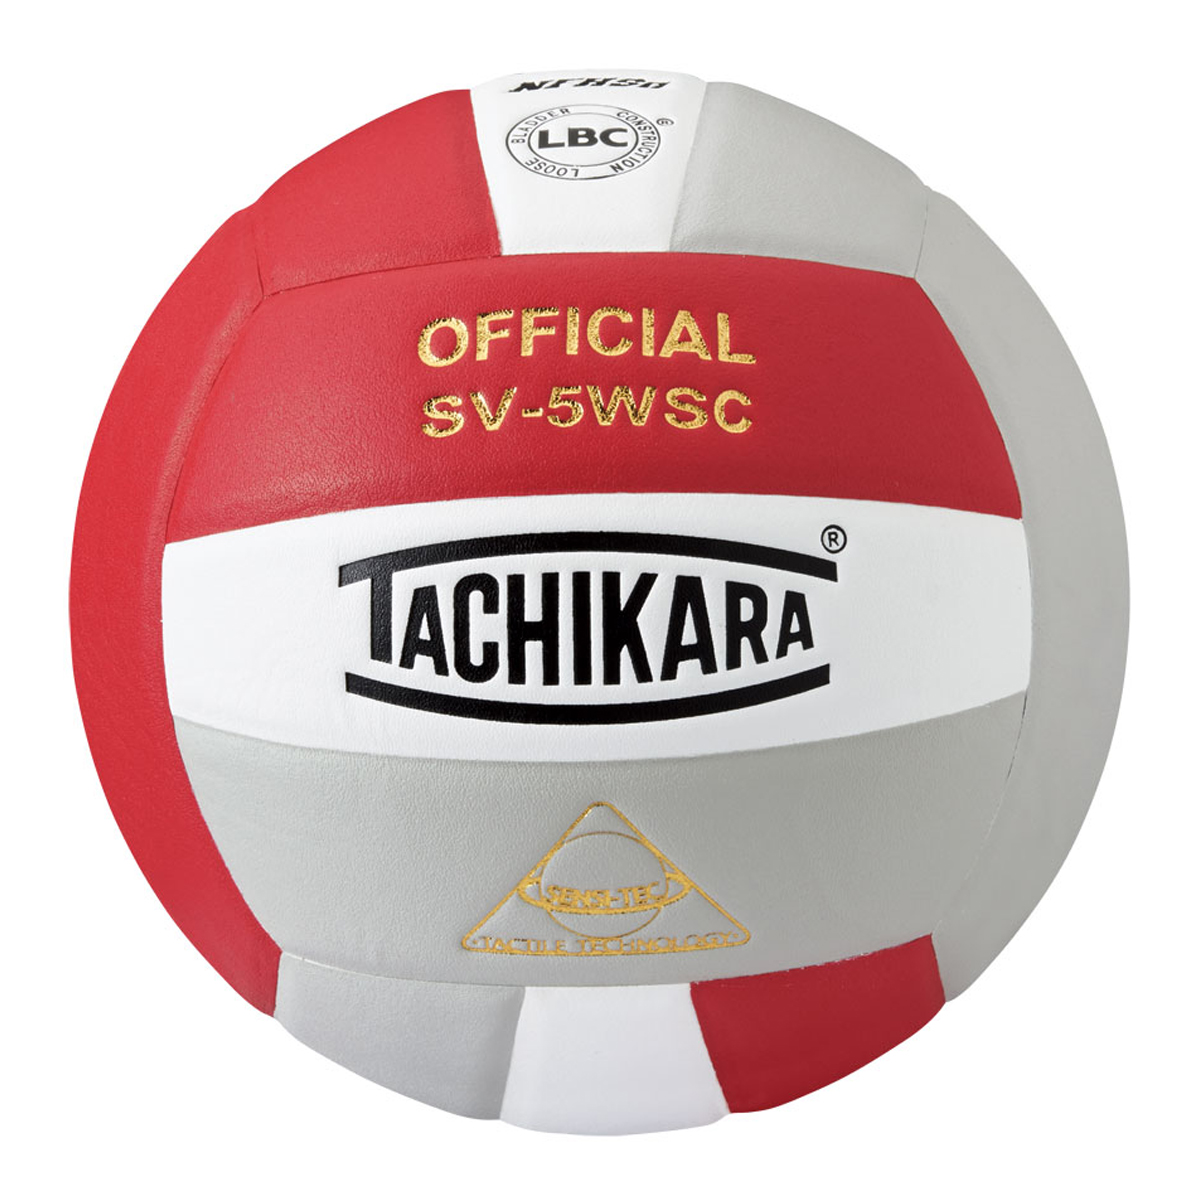 Tachikara SV5WSC Composite Volleyball-Scarlet, White & Silver